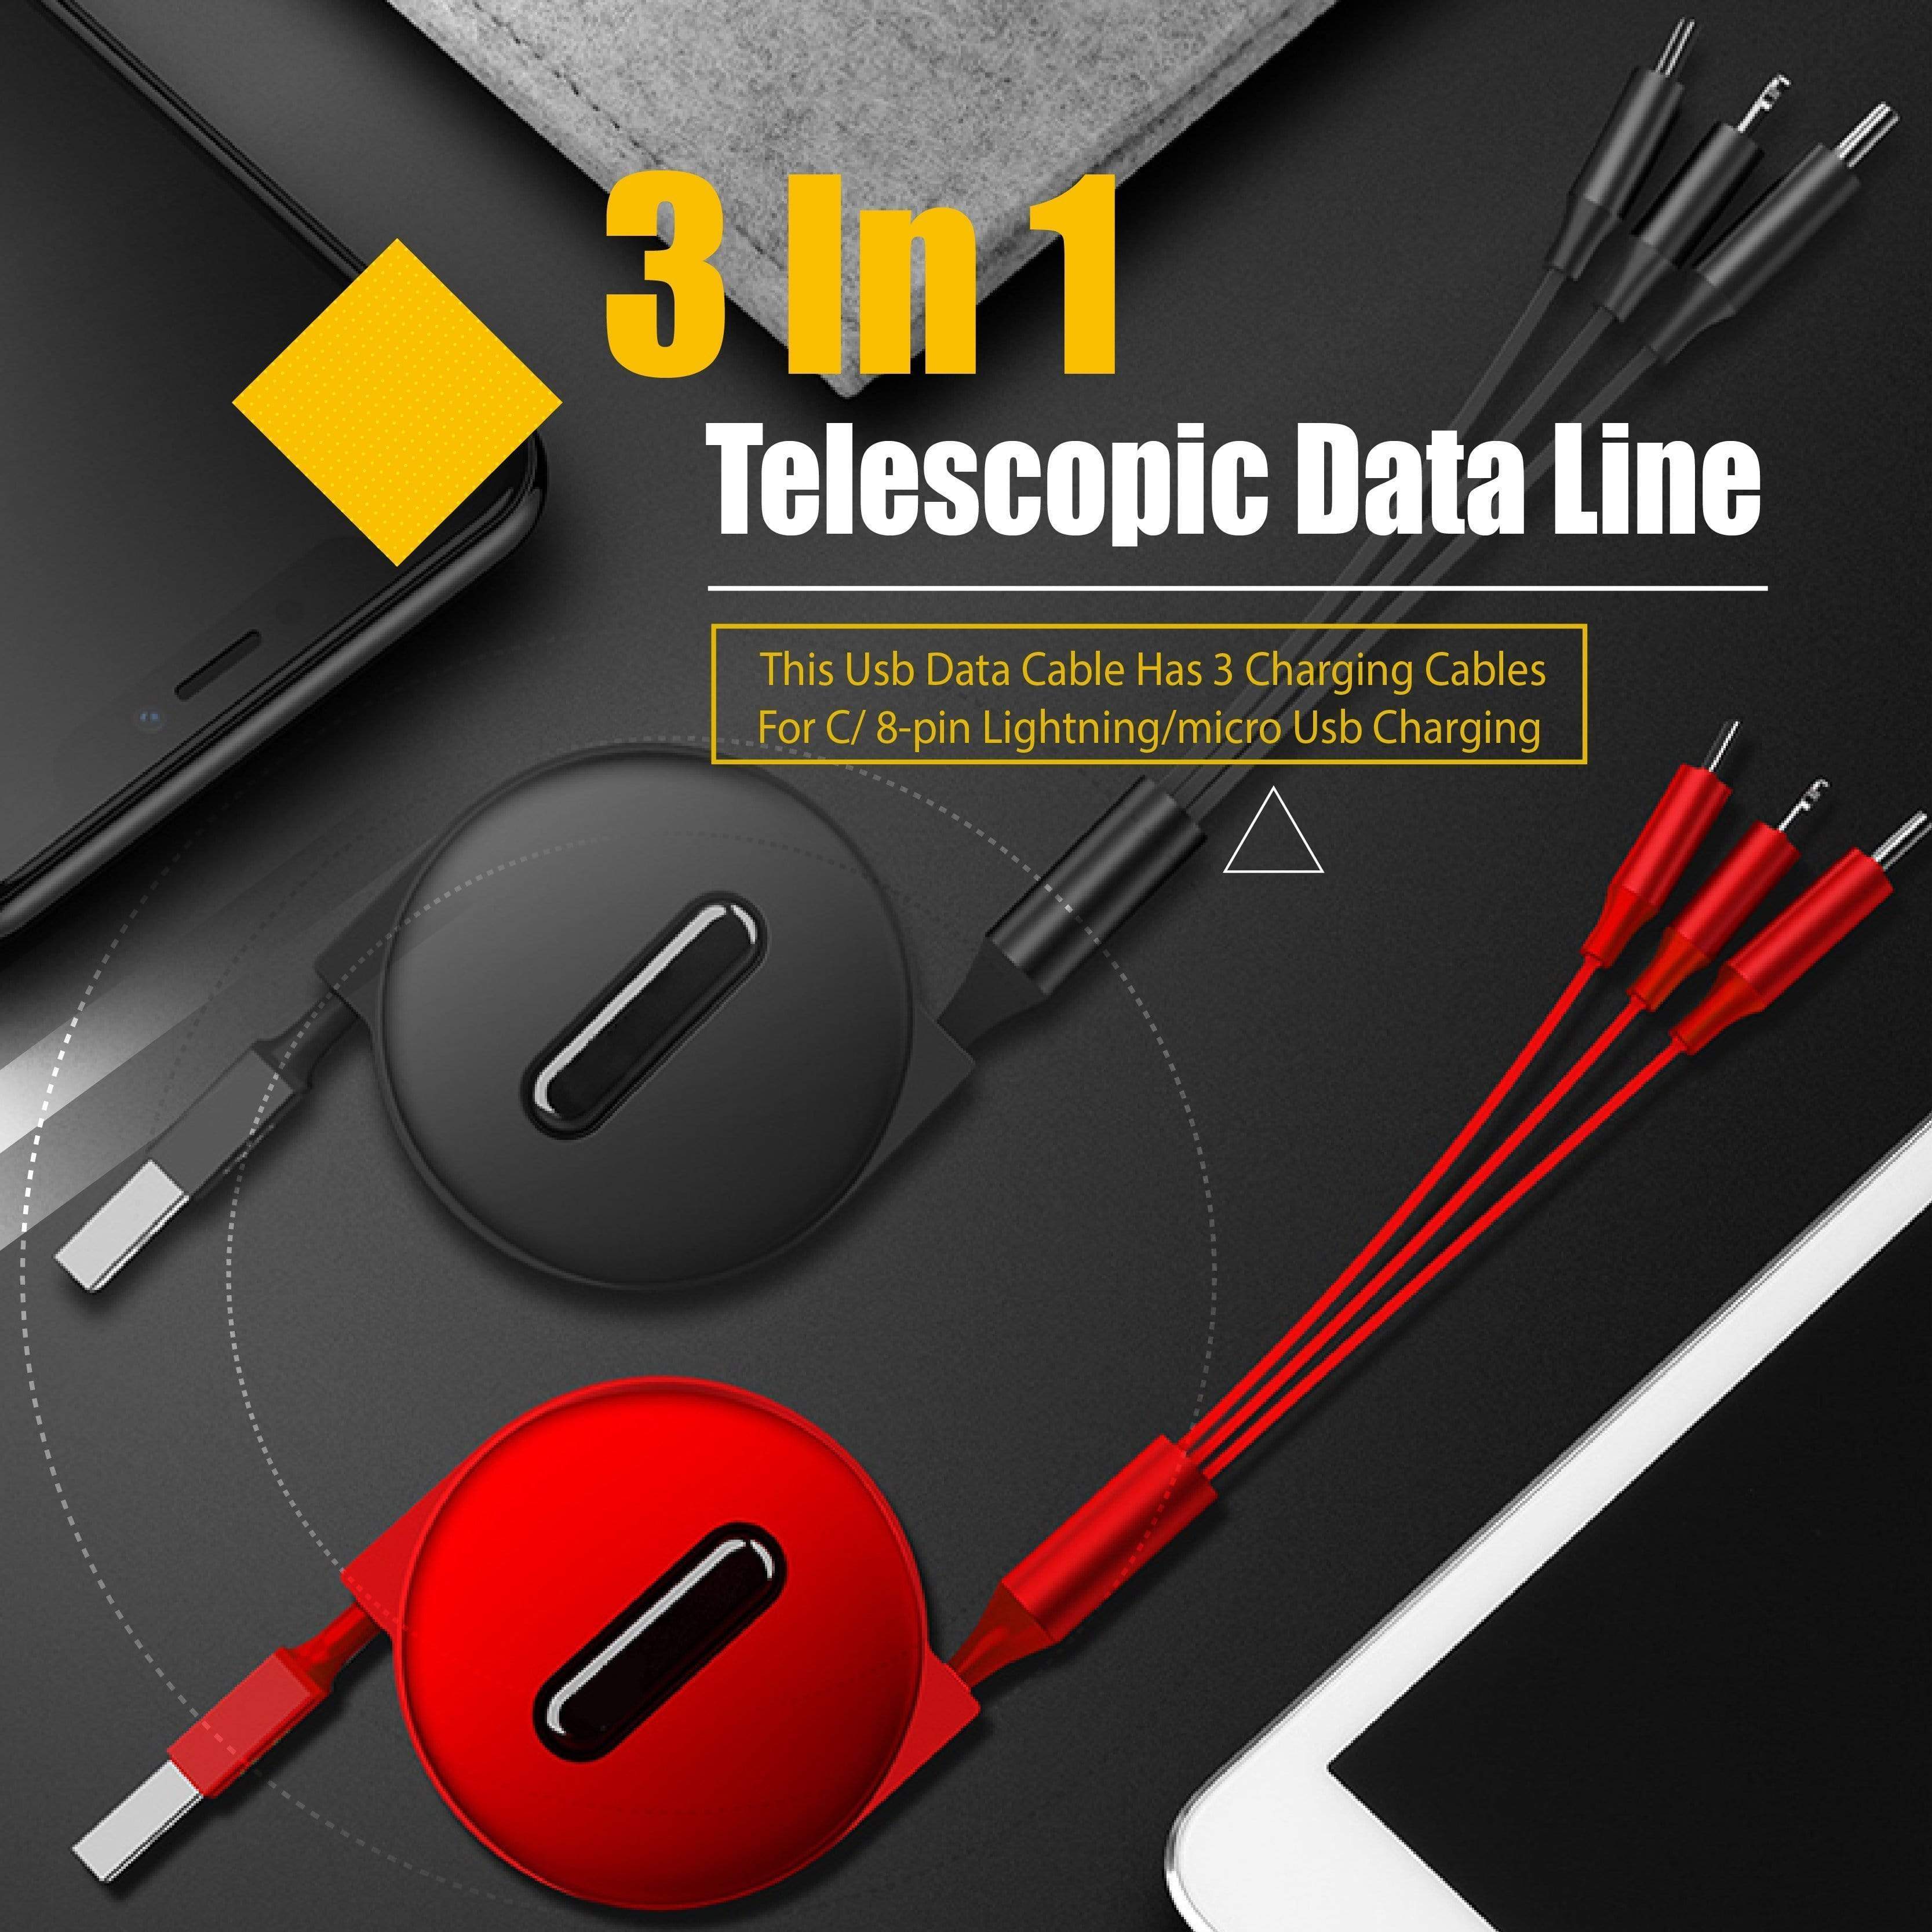 3 In 1 Telescopic Data Line